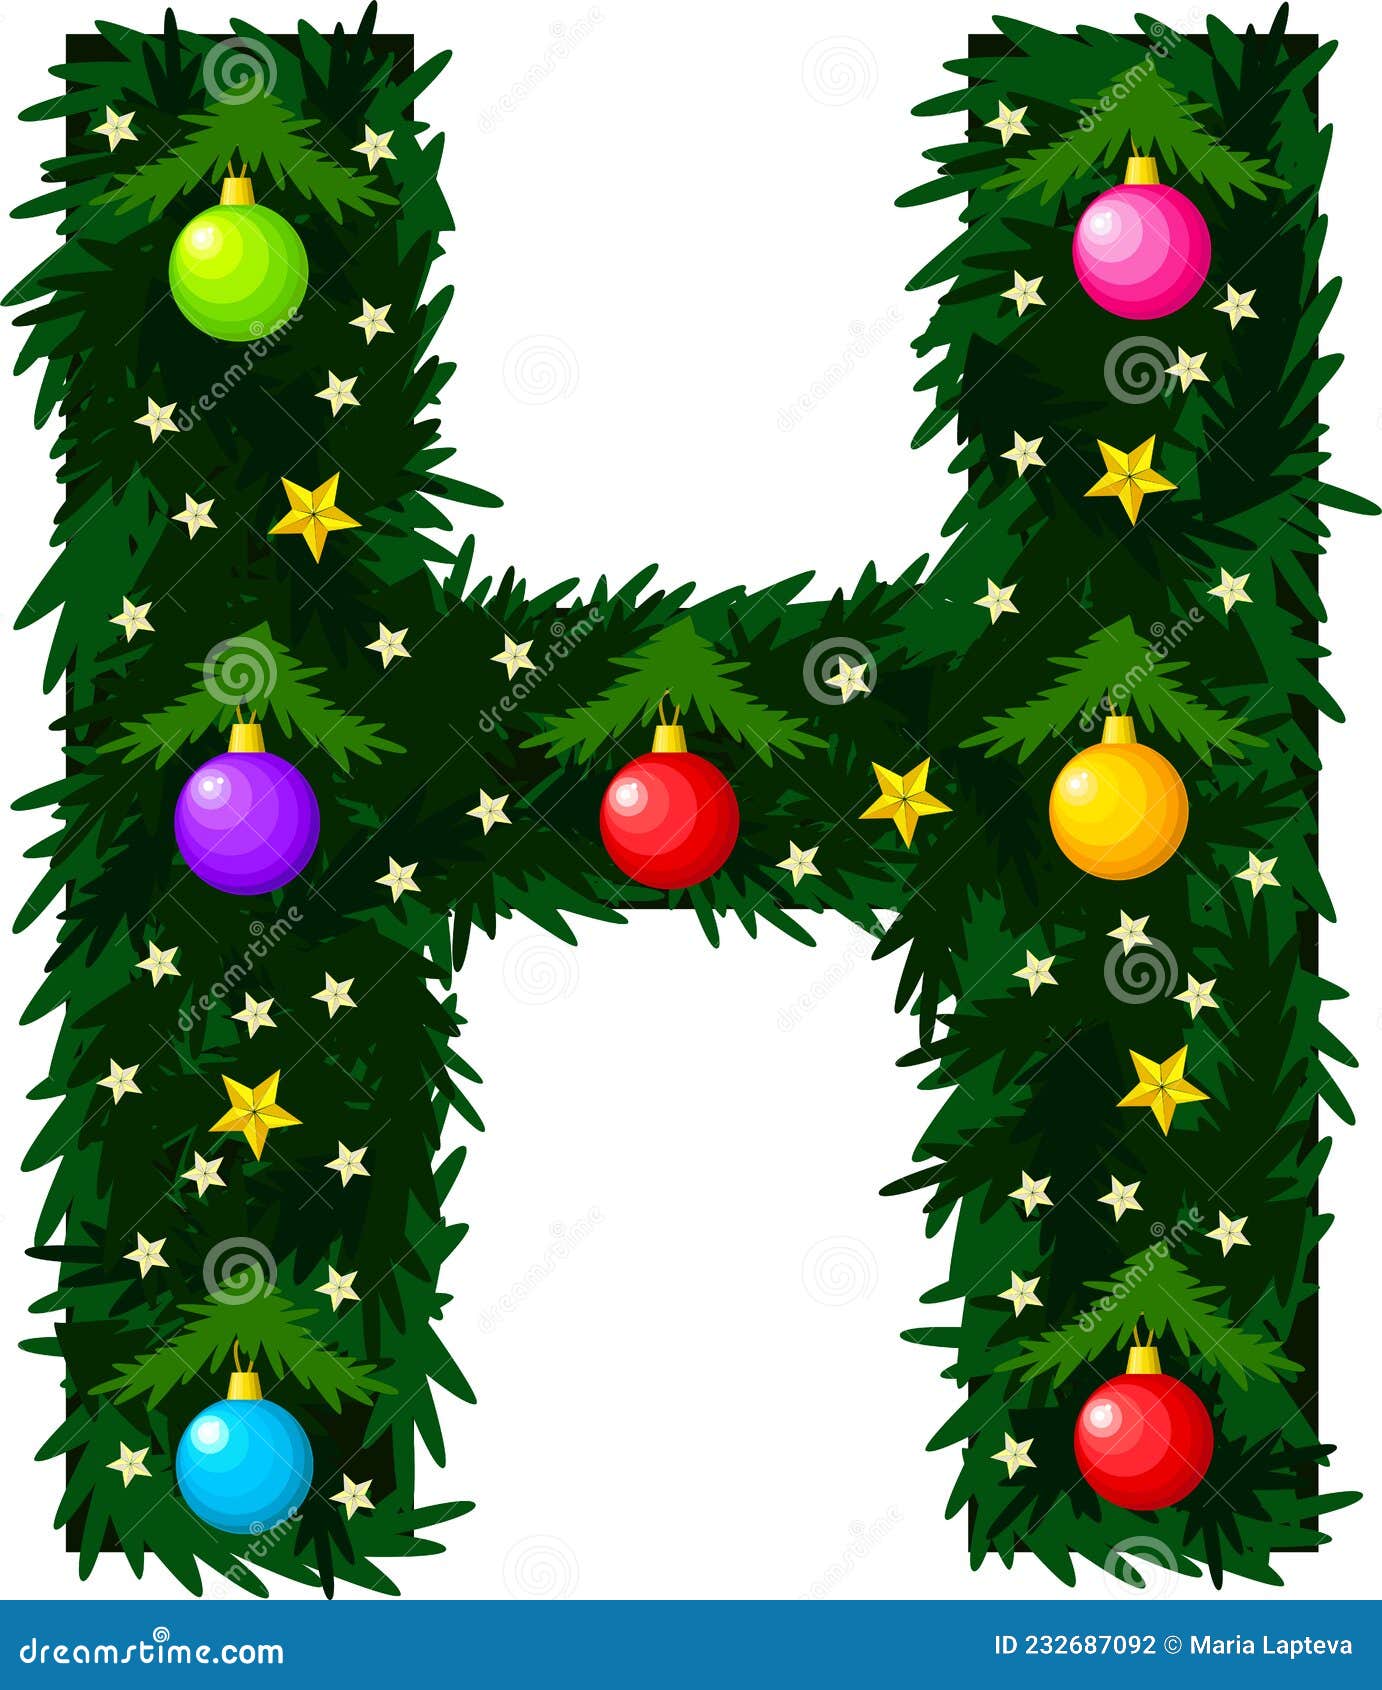 https://thumbs.dreamstime.com/z/letter-h-font-form-christmas-tree-winter-alphabet-made-decorations-balls-stars-232687092.jpg